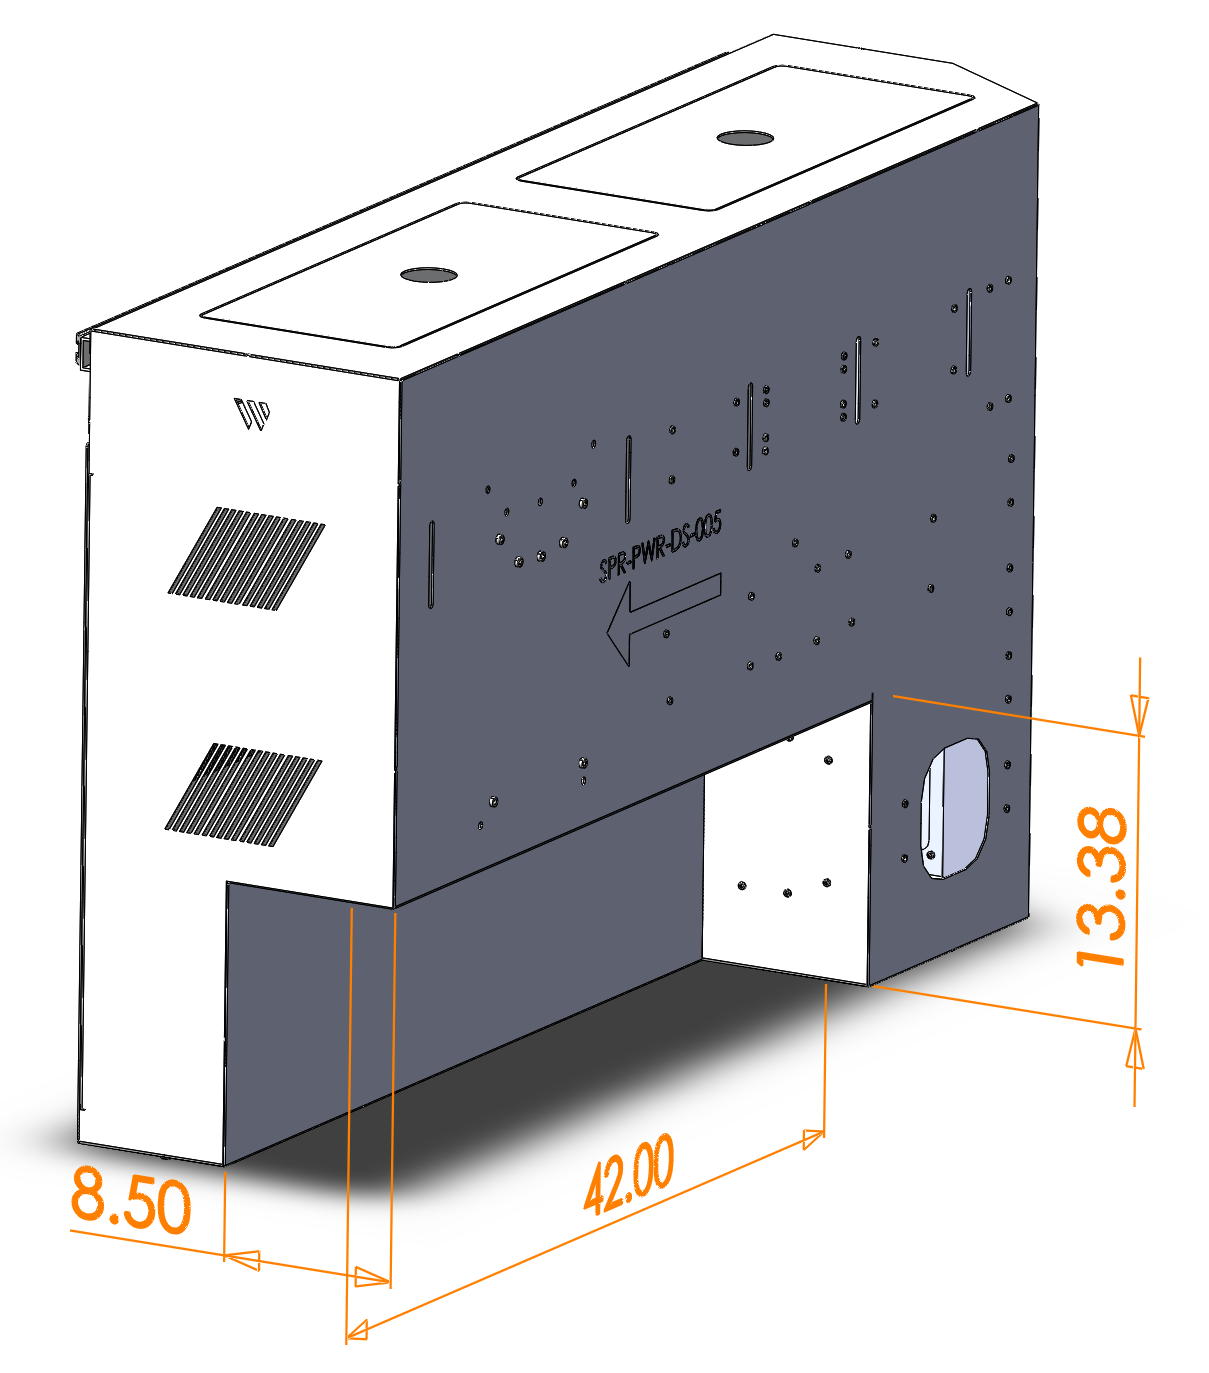 Tiny Watts 5.0 - The Perfect Conversion Van Solar Kit